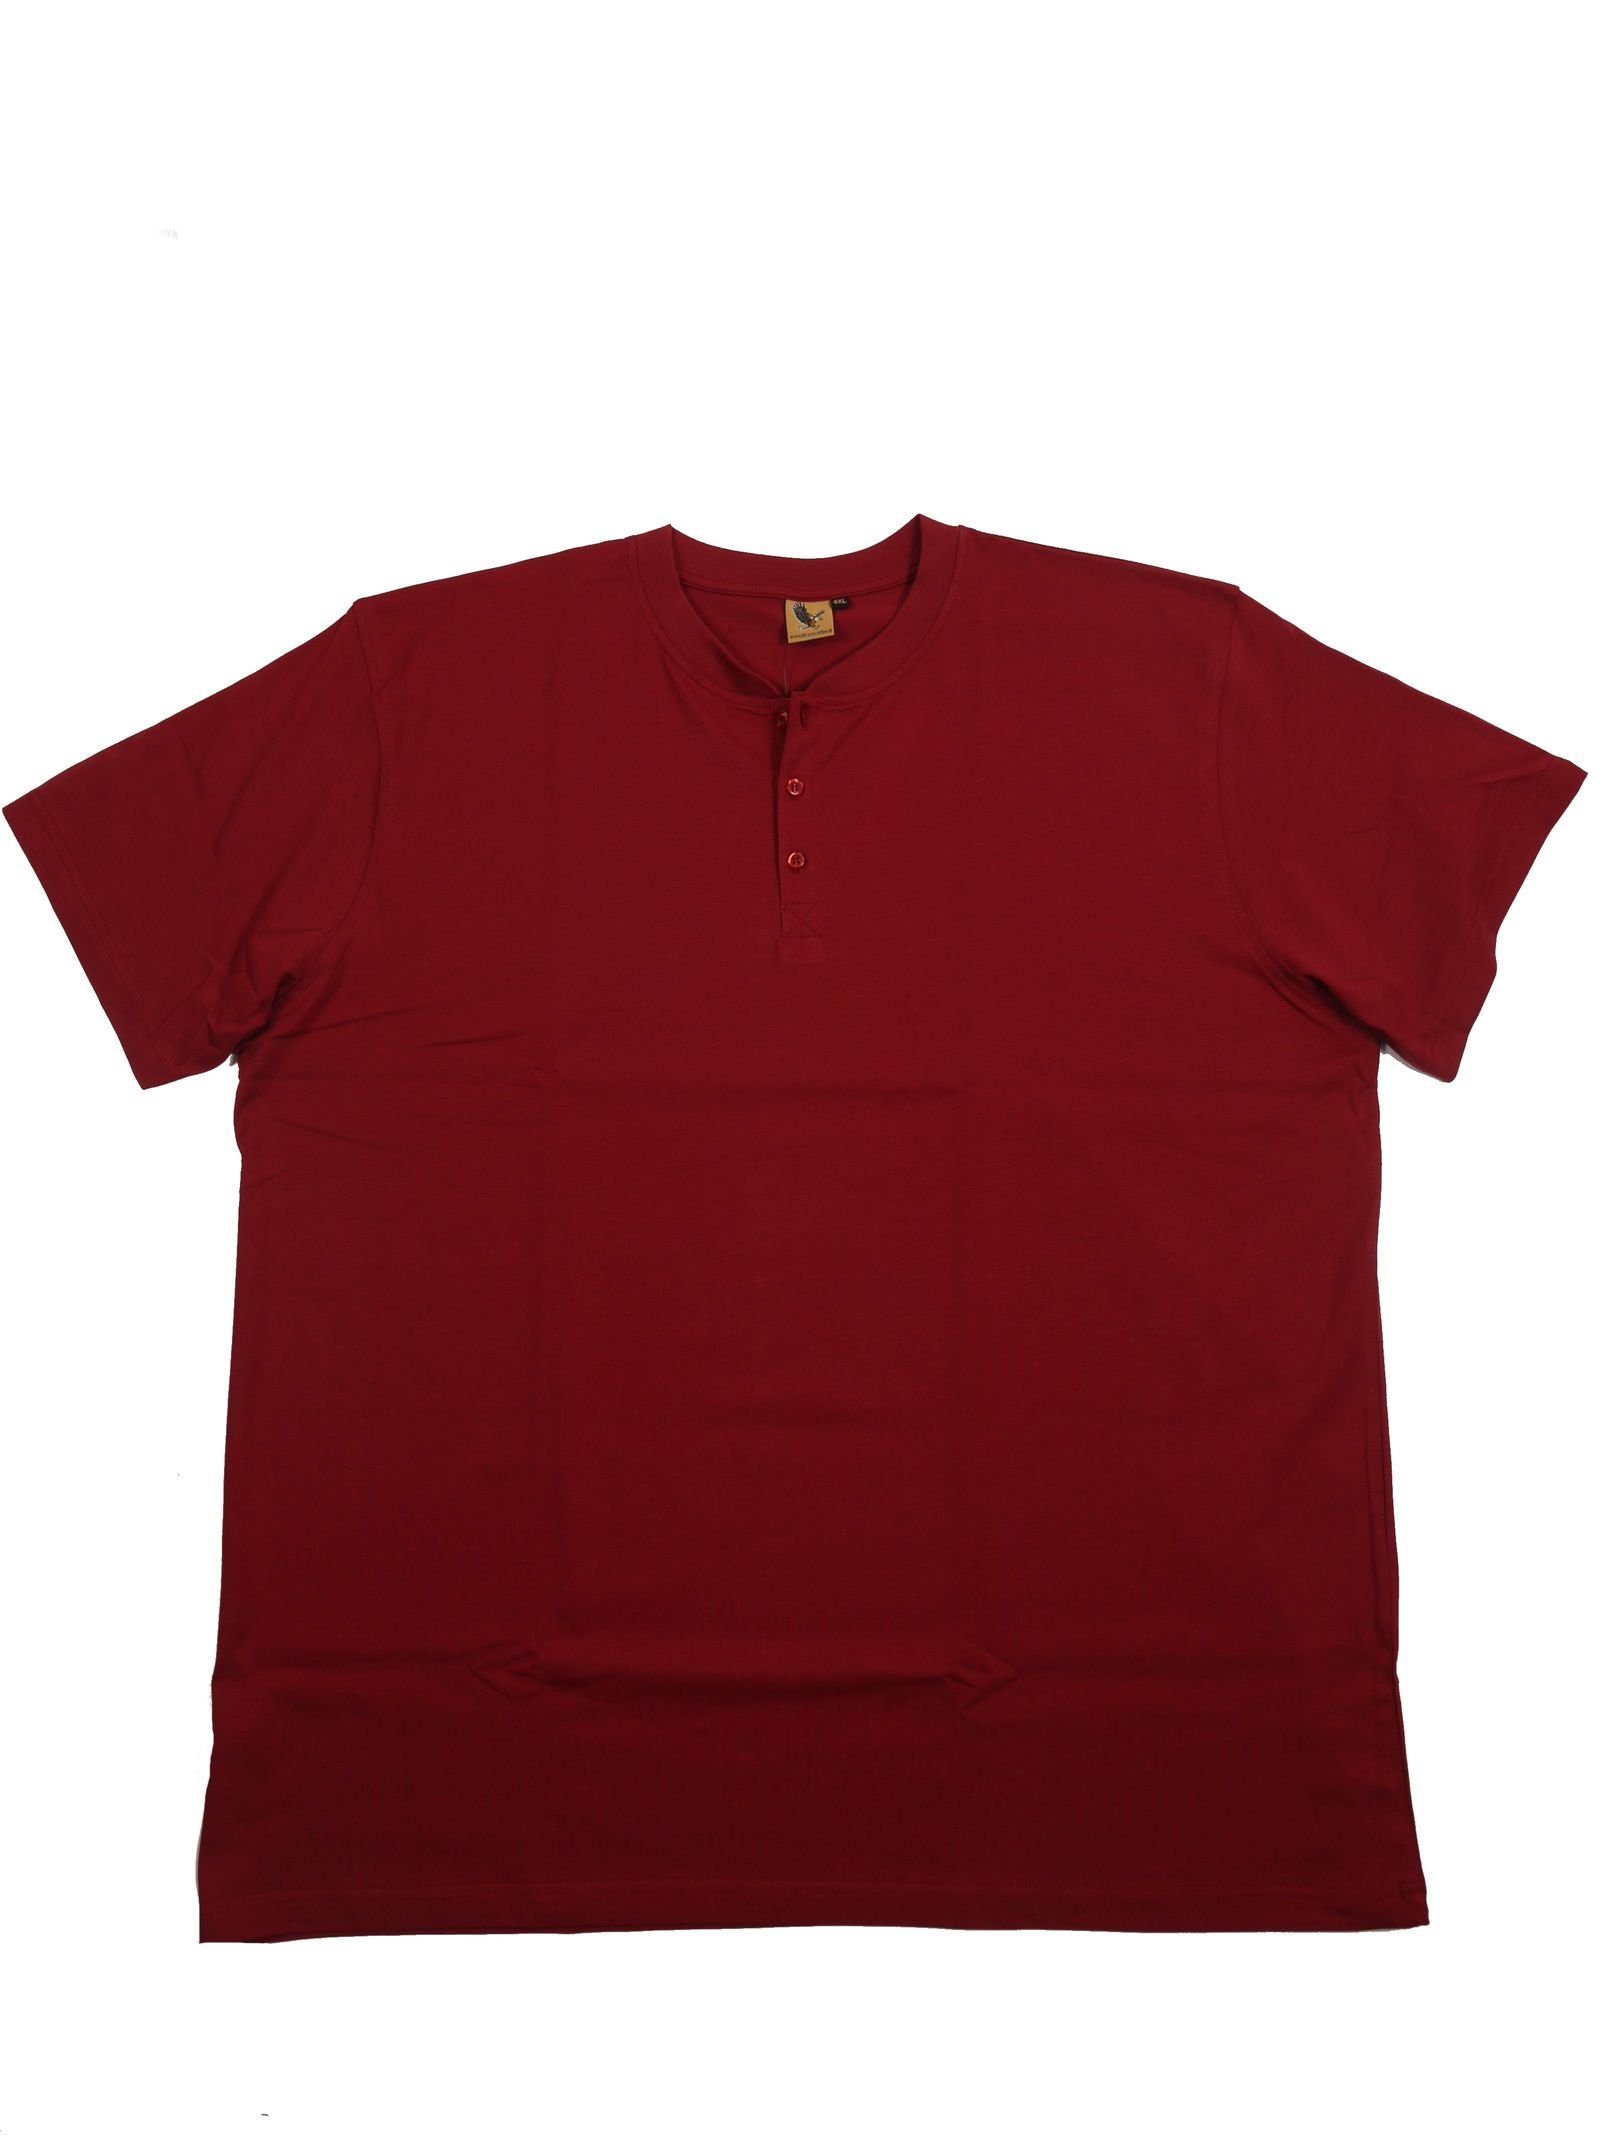 T-Shirt von Abraxas, Knopfleiste ABRAXAS Kurzarm bordeaux T-Shirt mit